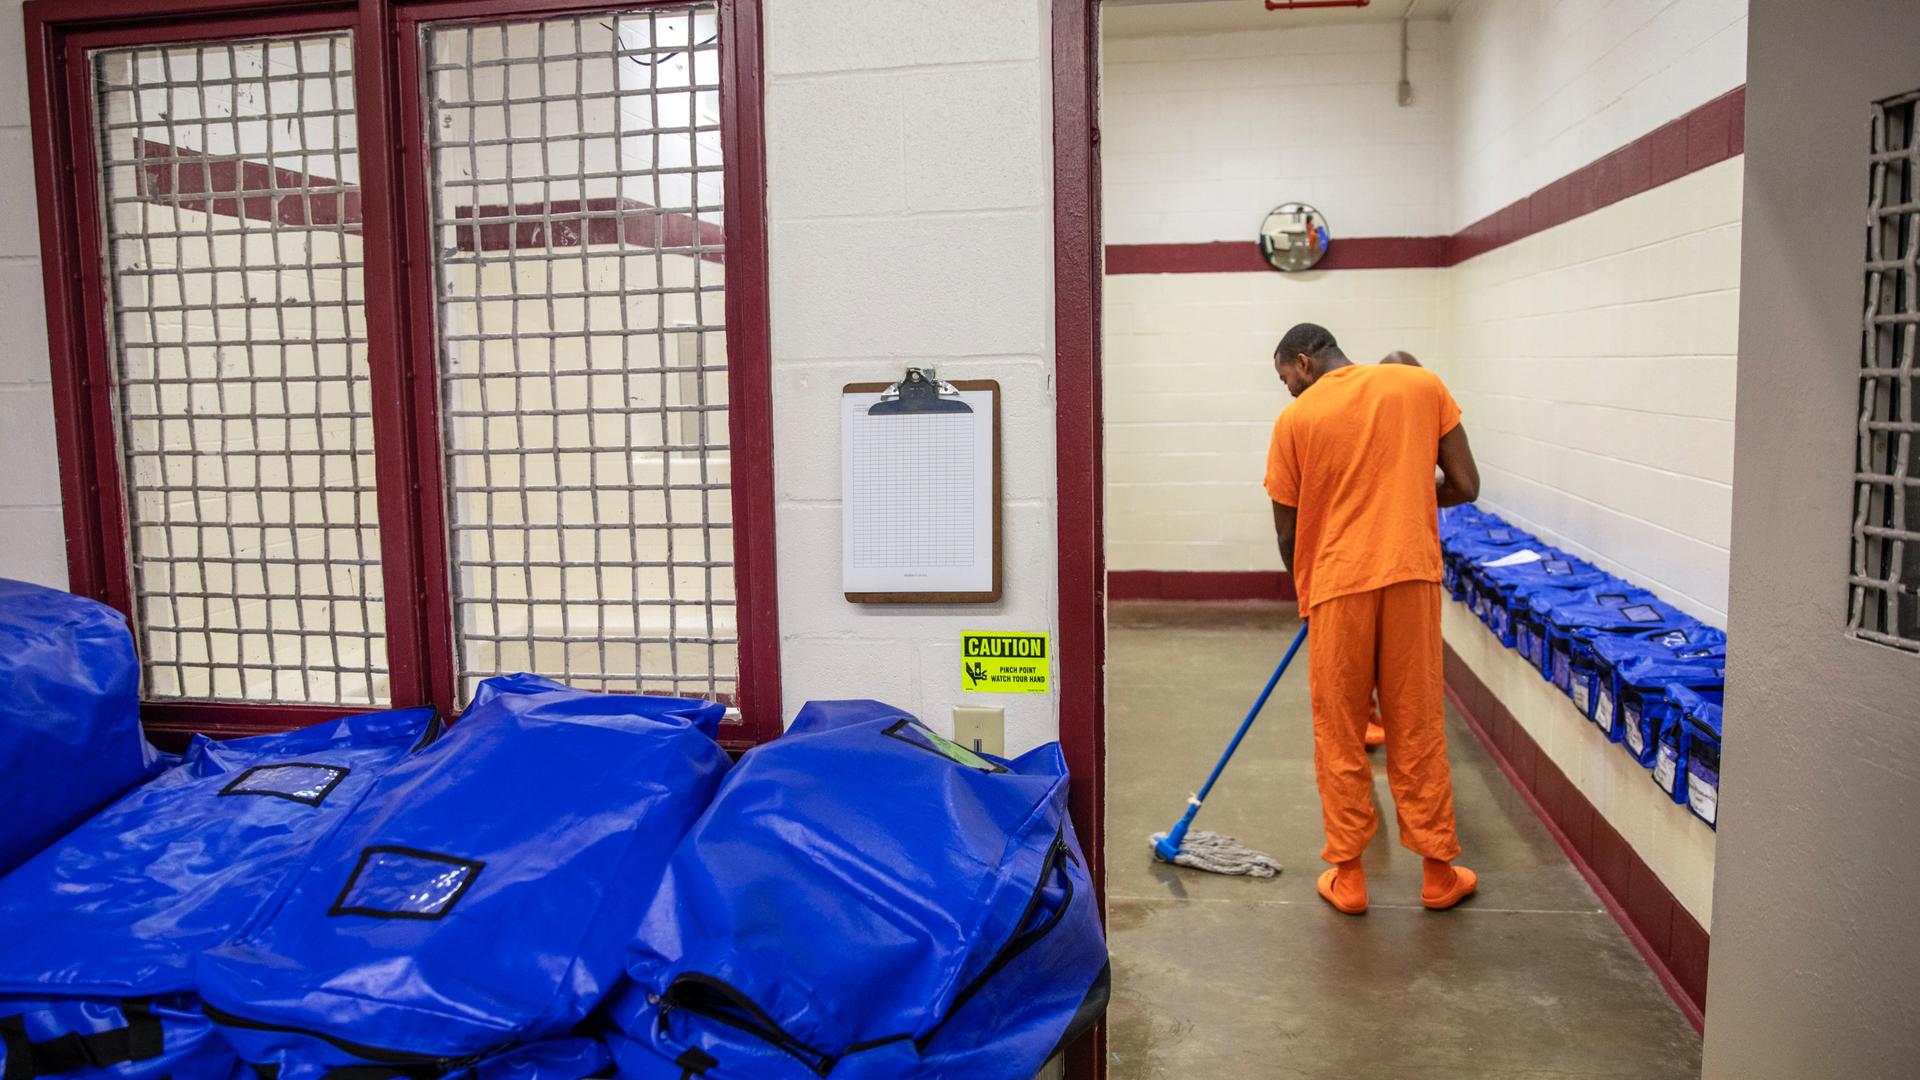 An inmate wearing an orange suit mops near blue plastic bags inside a detention center. 